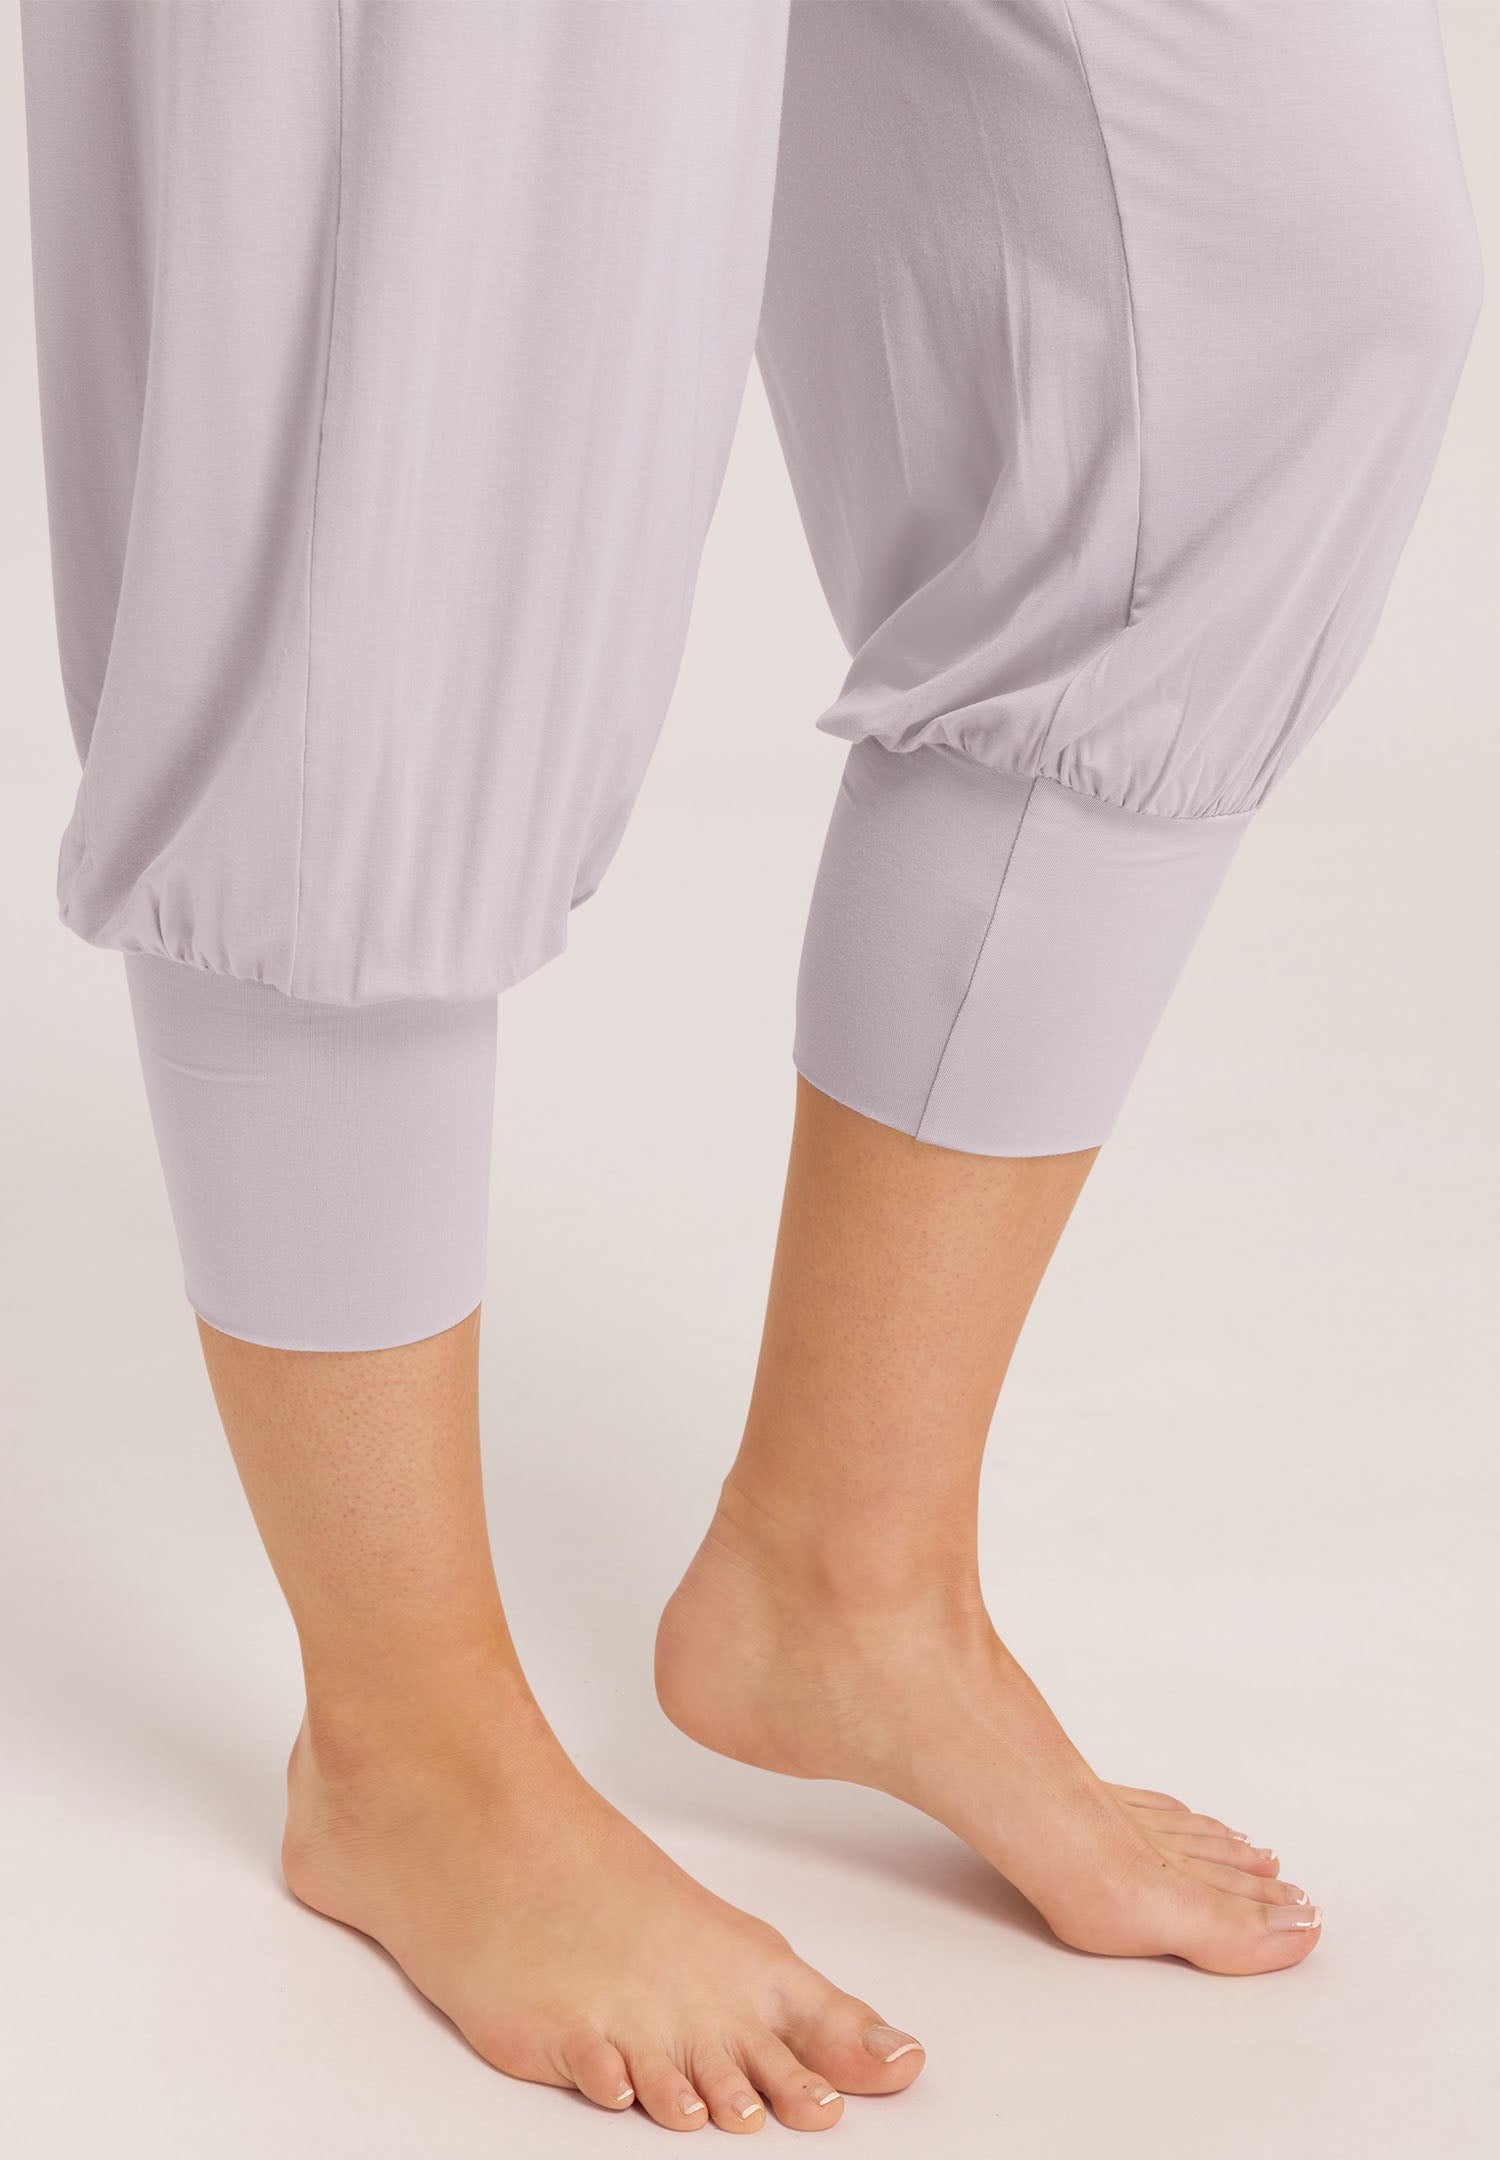 78797 Yoga Crop Pants - 2461 Lilac Marble